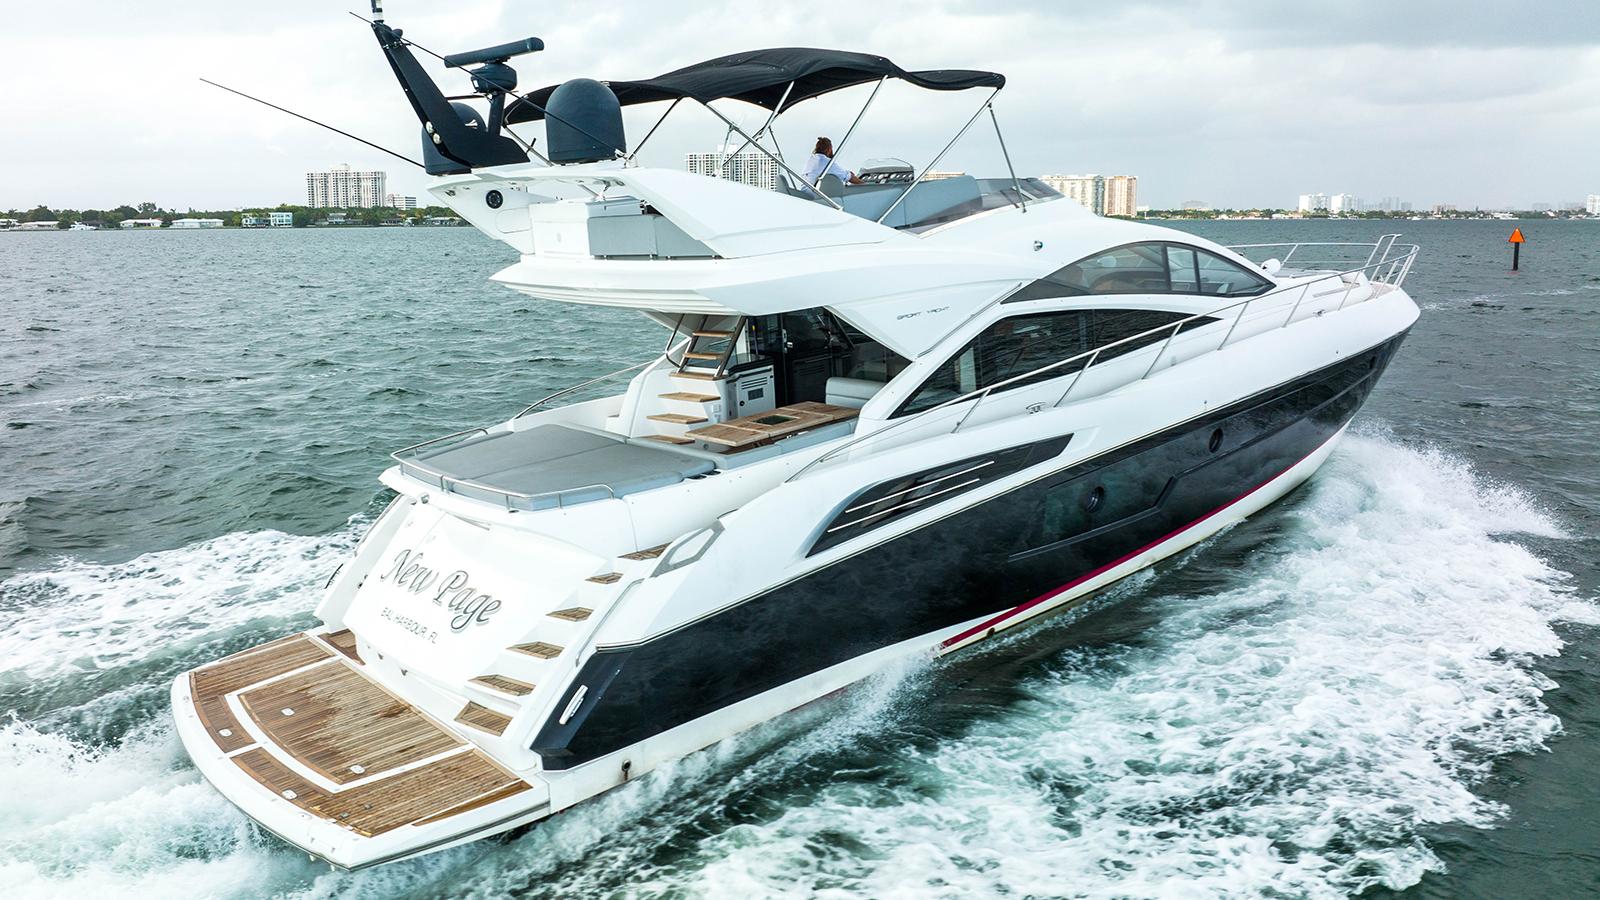 2014 Sunseeker 68 Sport Yacht